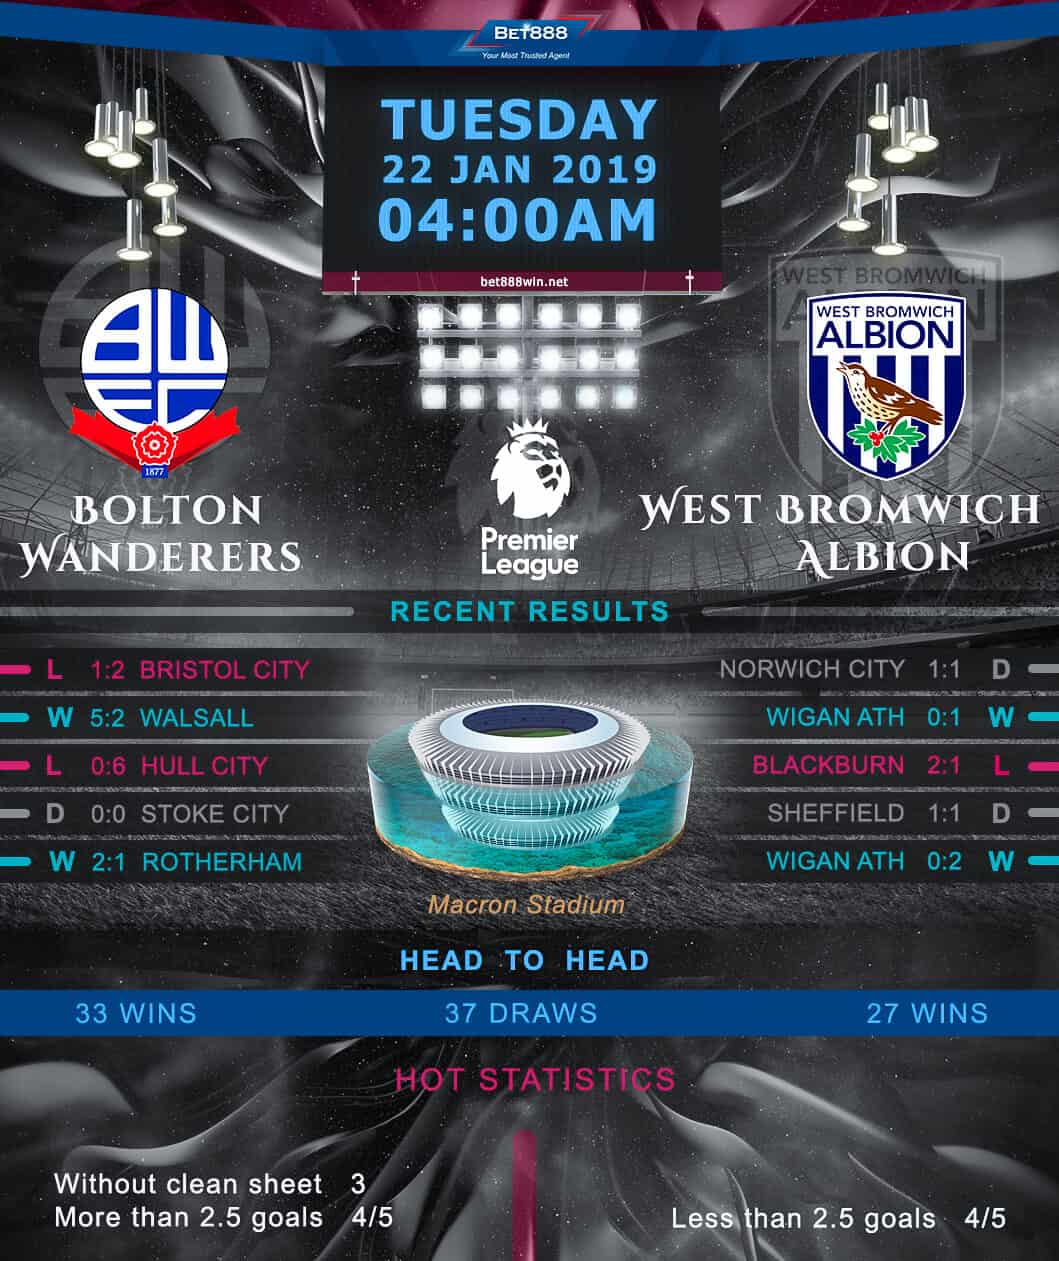 Bolton Wanderers vs West Bromwich Albion 22/01/19